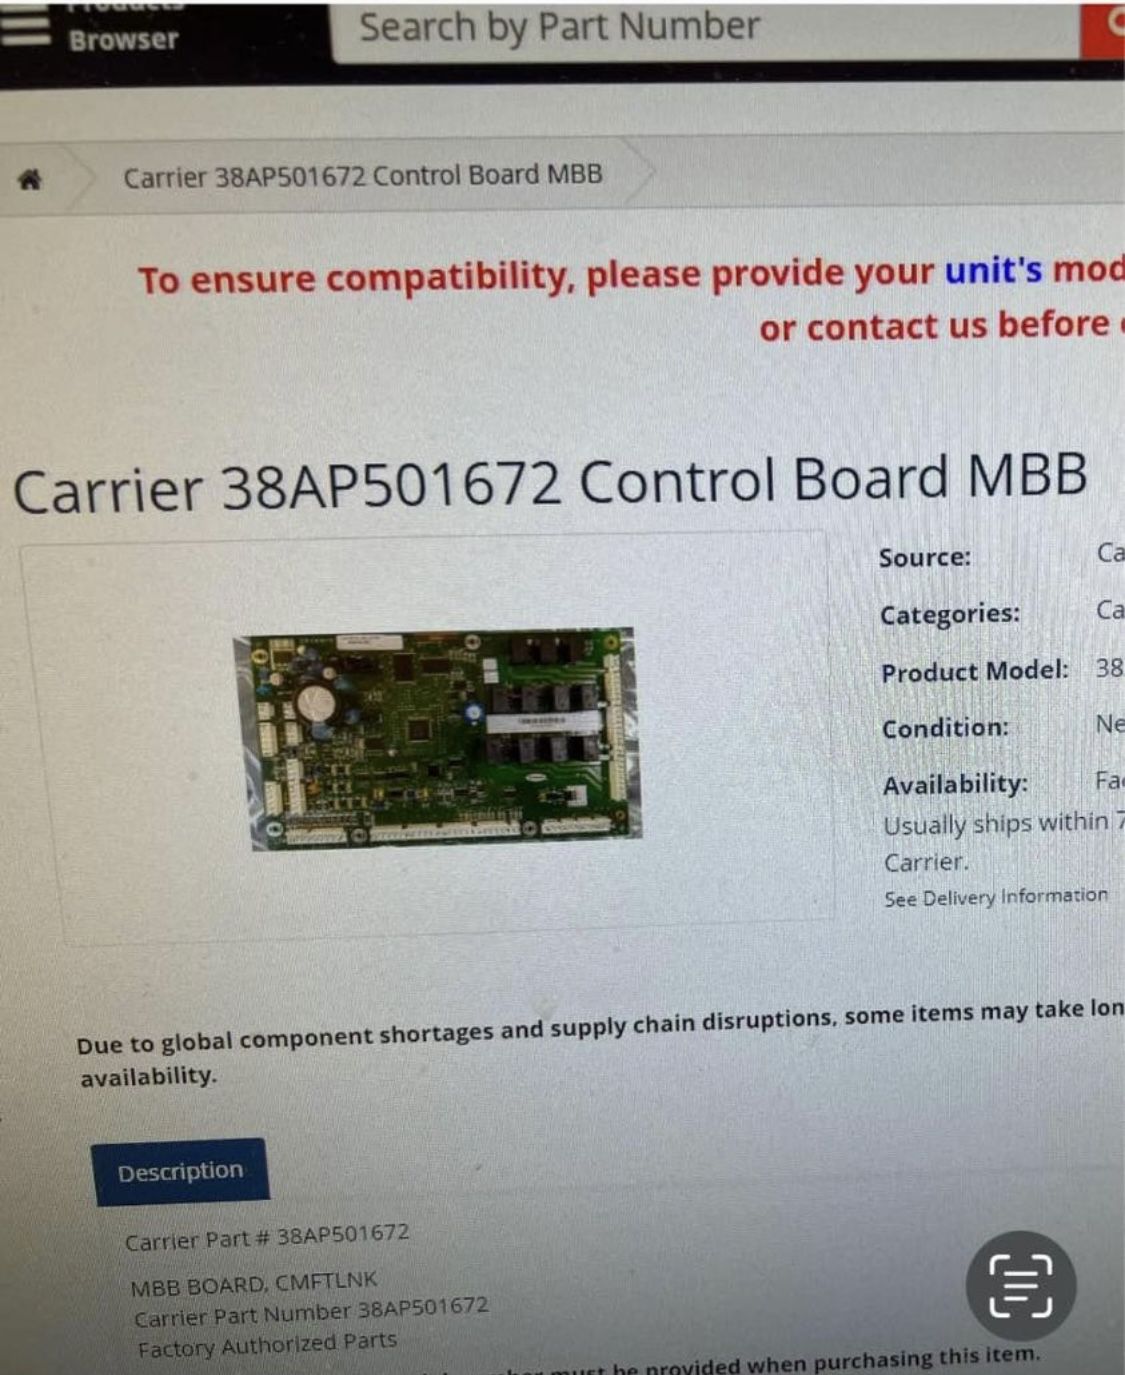 Carrier 38AP501672 Control Board MBB